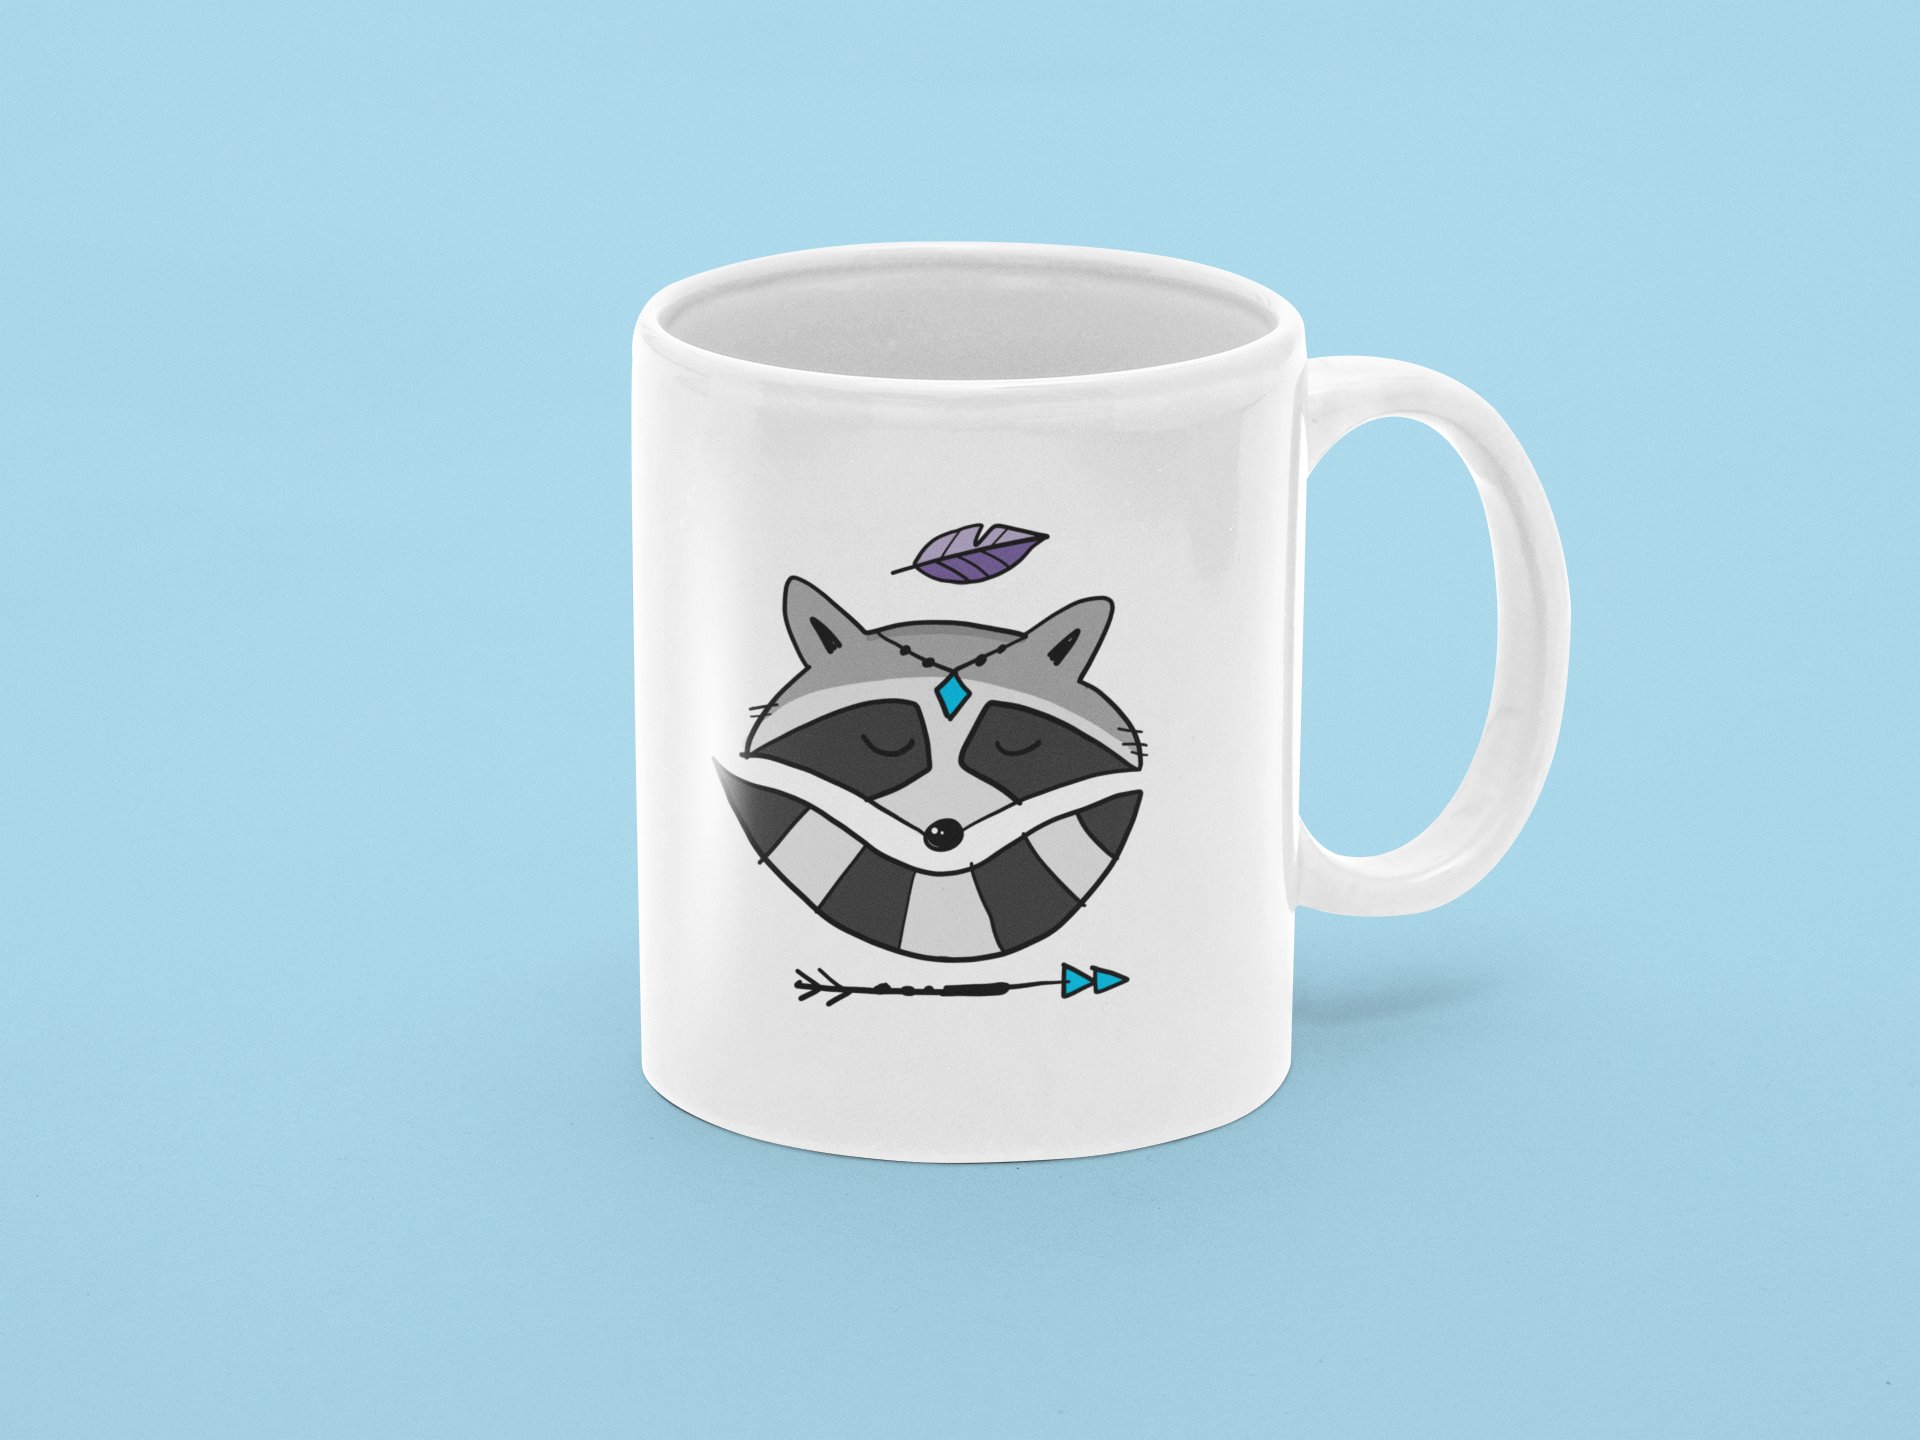 11 oz coffee mug mockup with a color customizable background 31890 988